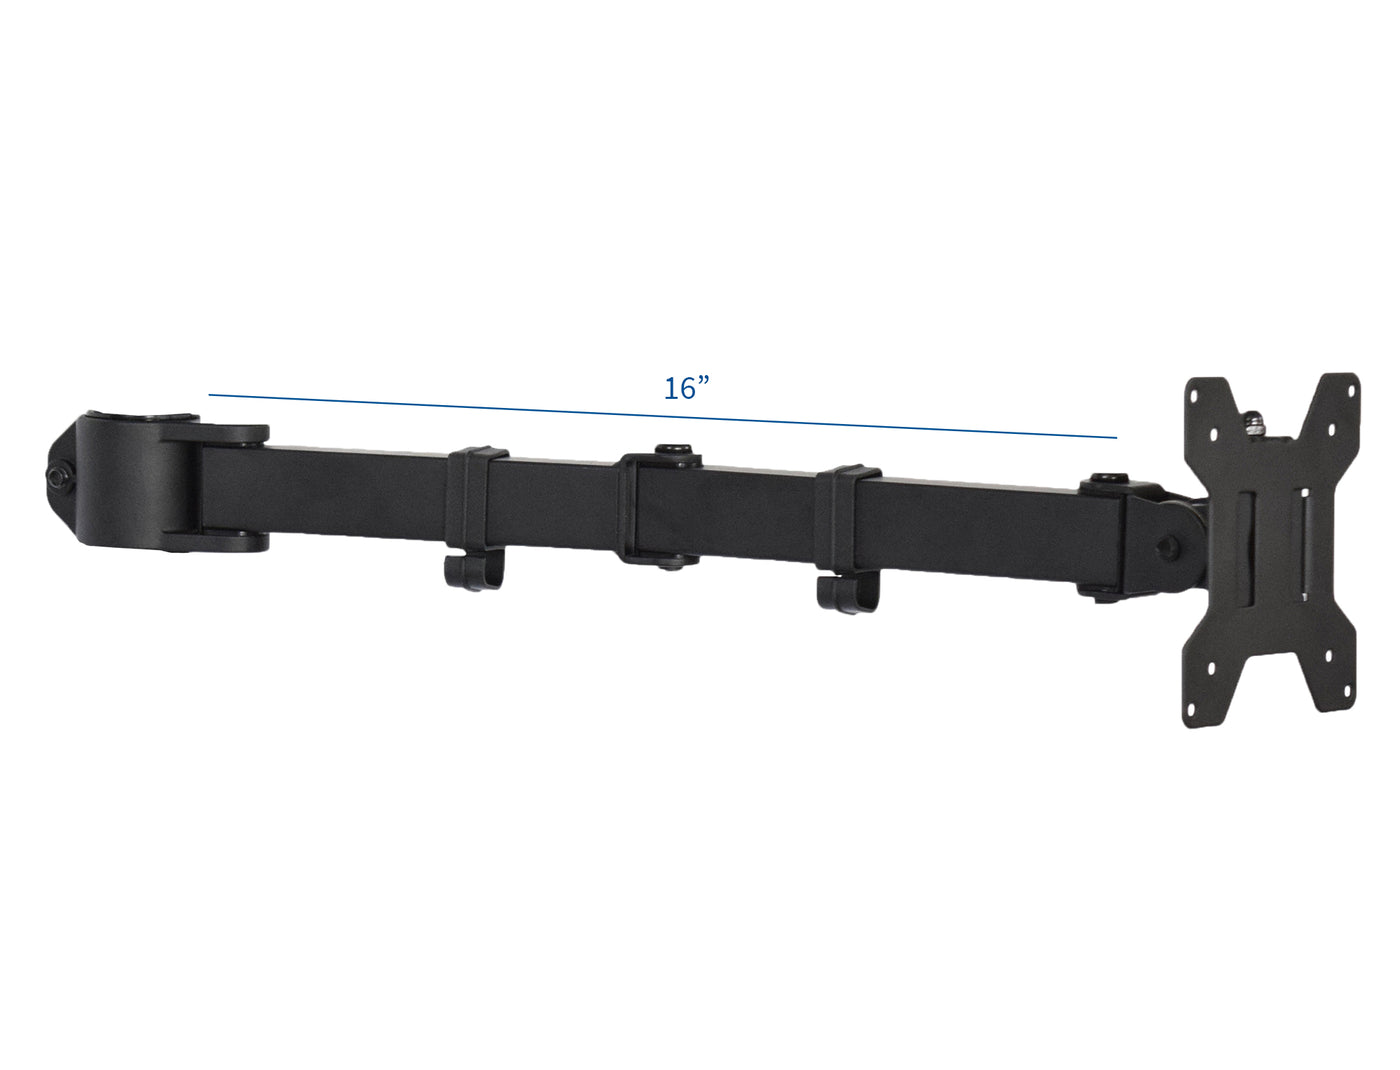 Sixteen-inch long monitor mount arm with a detachable VESA plate bracket.